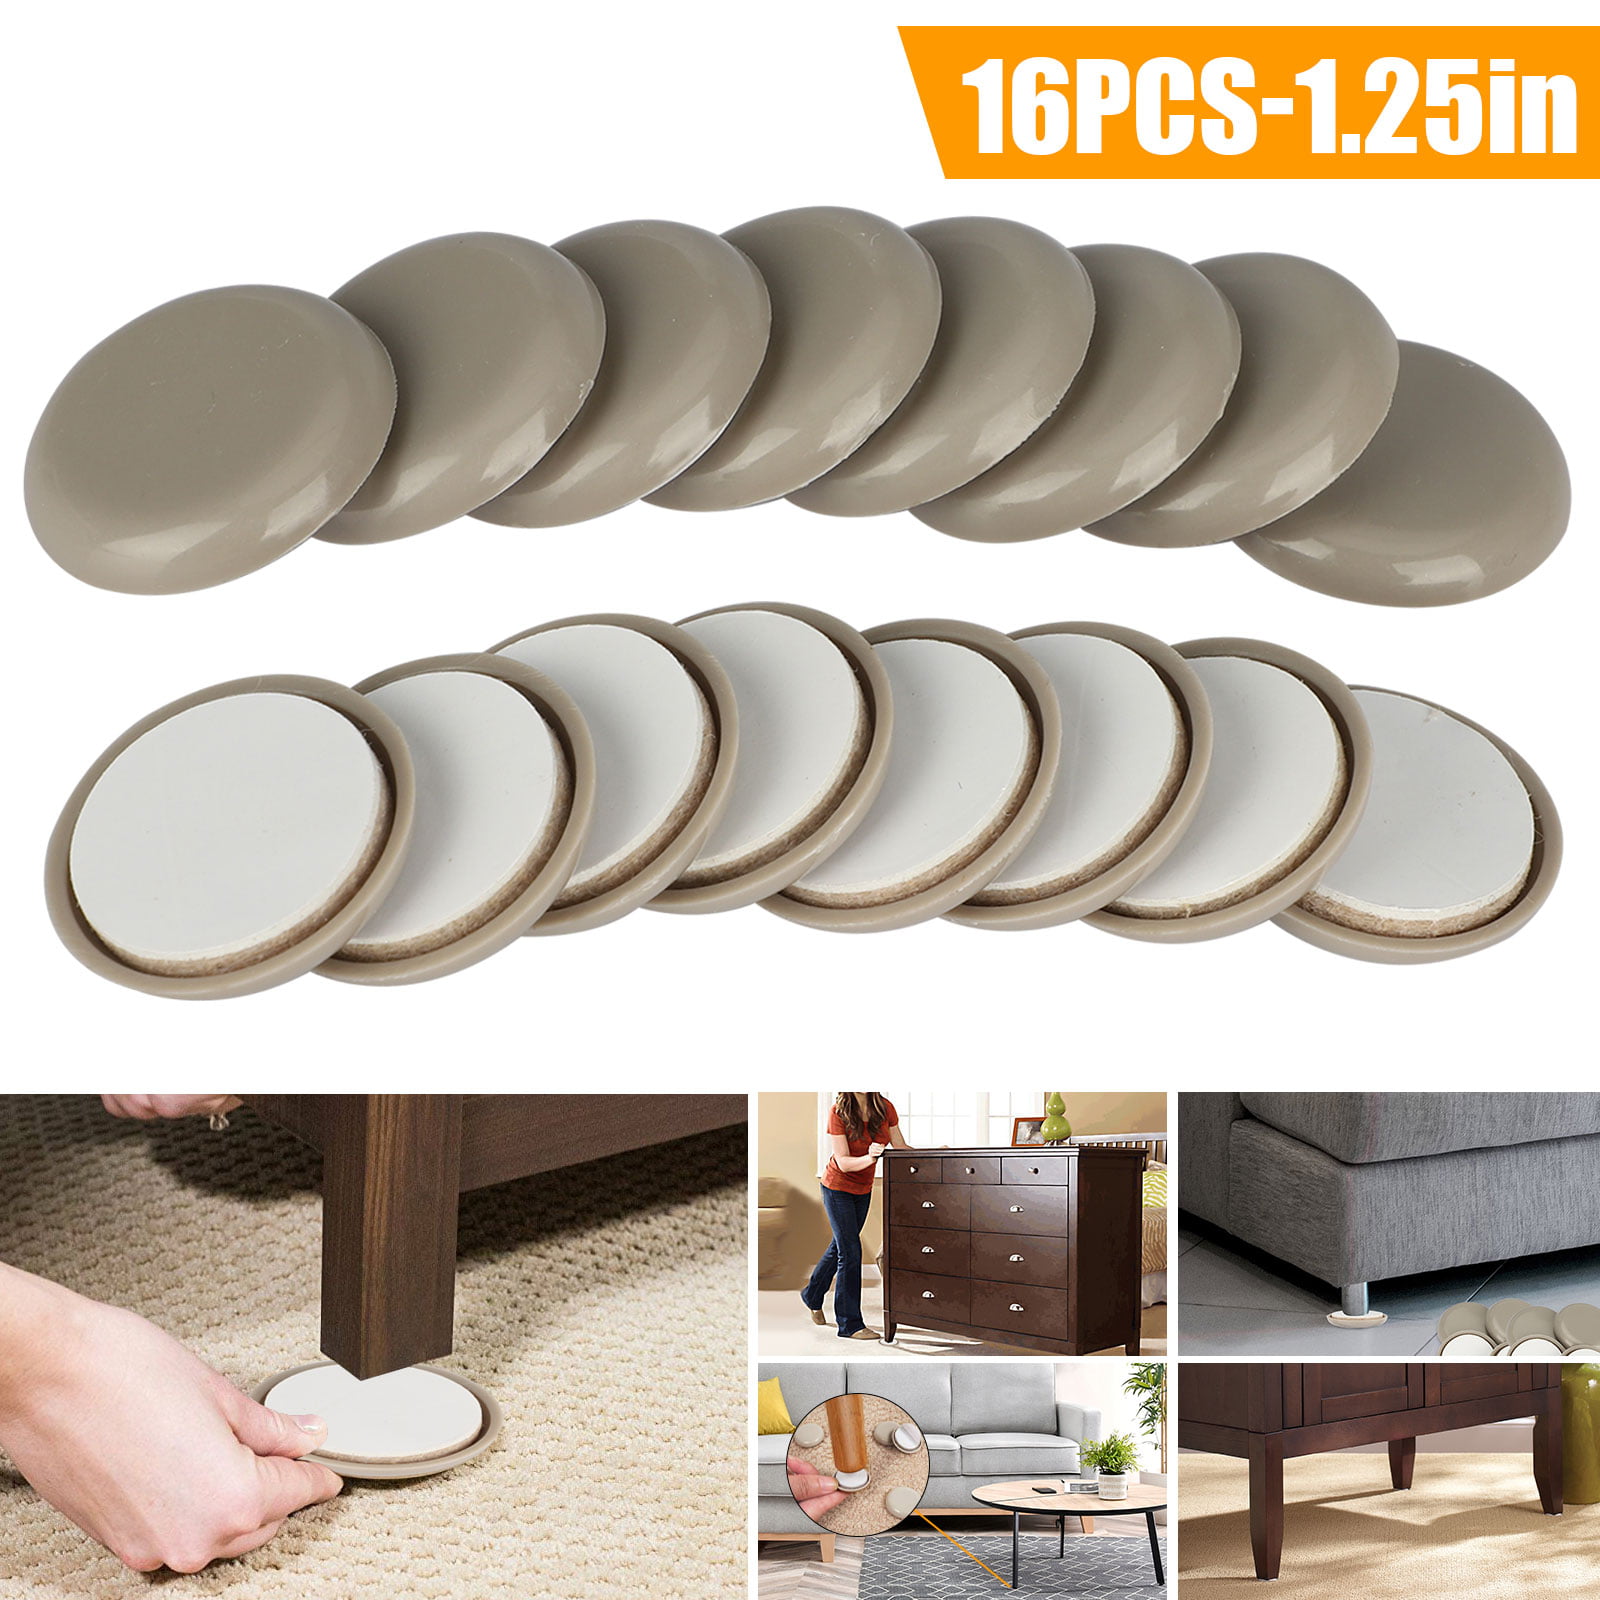 16 pcs Small Furniture Sliders Reusable for Carpet Hard Floor 3-1/2 Inch 